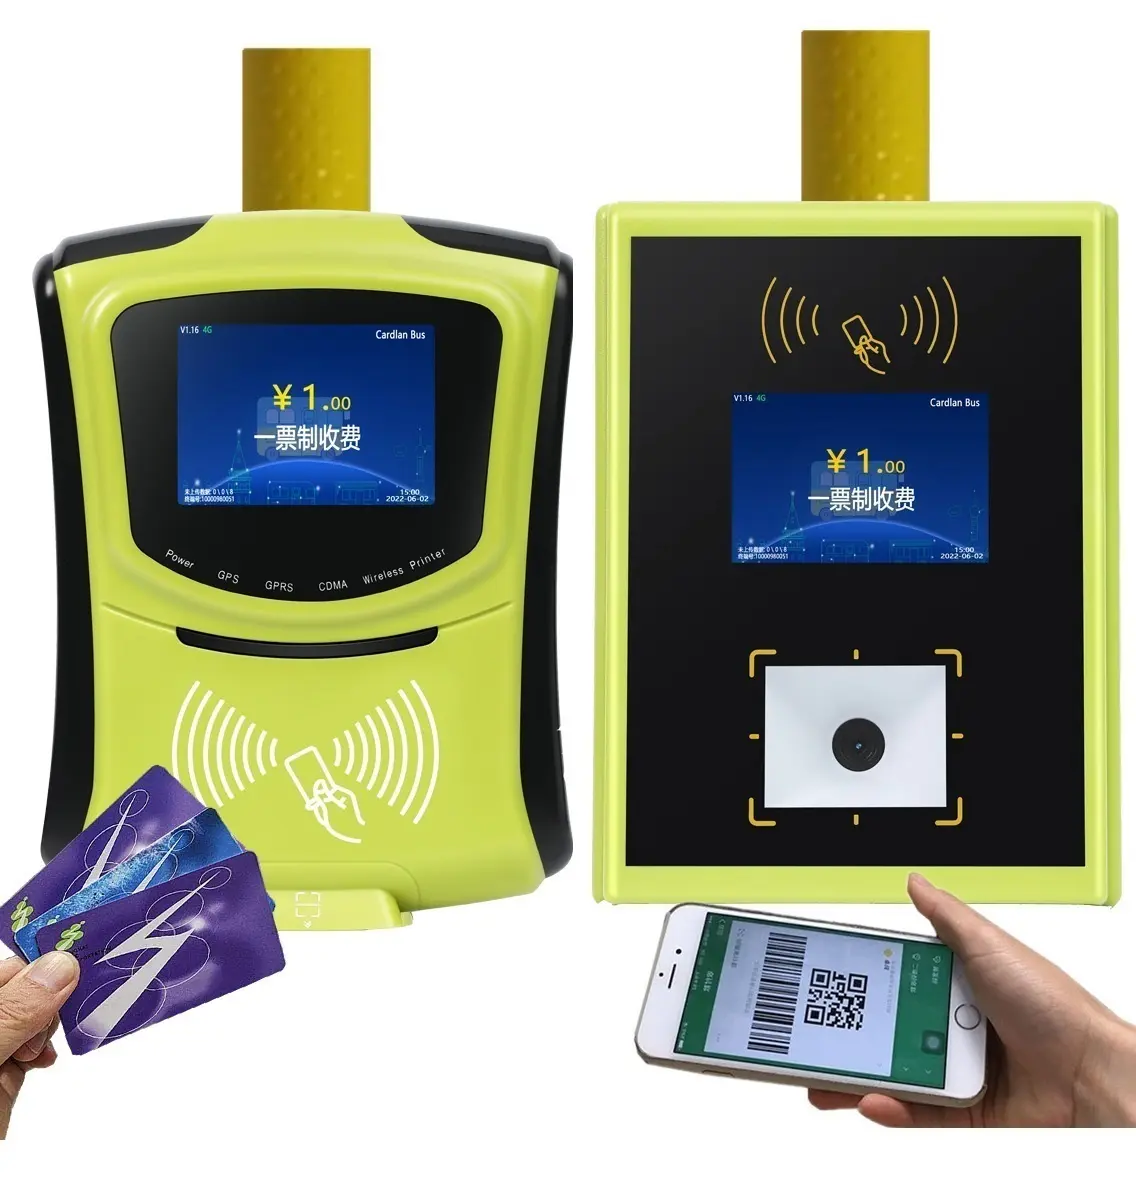 Fabbrica Terminale POS con App Applicazione con NFC RFID Card Reader 3G WIFI GSM GPRS Bus Ticket Validatore